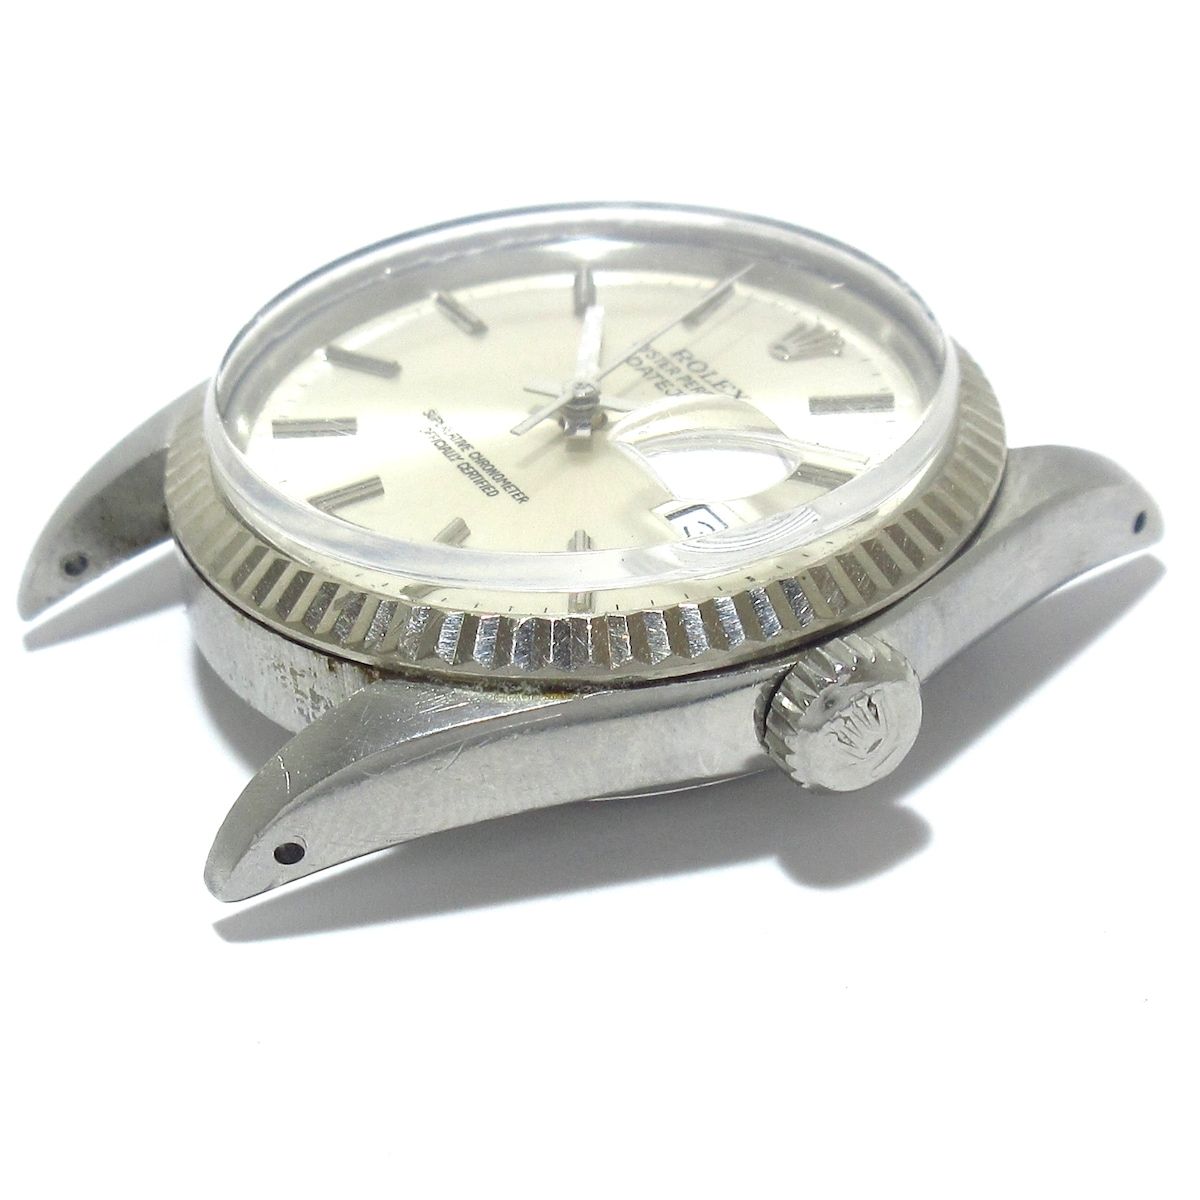 ROLEX(ロレックス) 腕時計 デイトジャスト 16014 メンズ K18WG×SS/18 